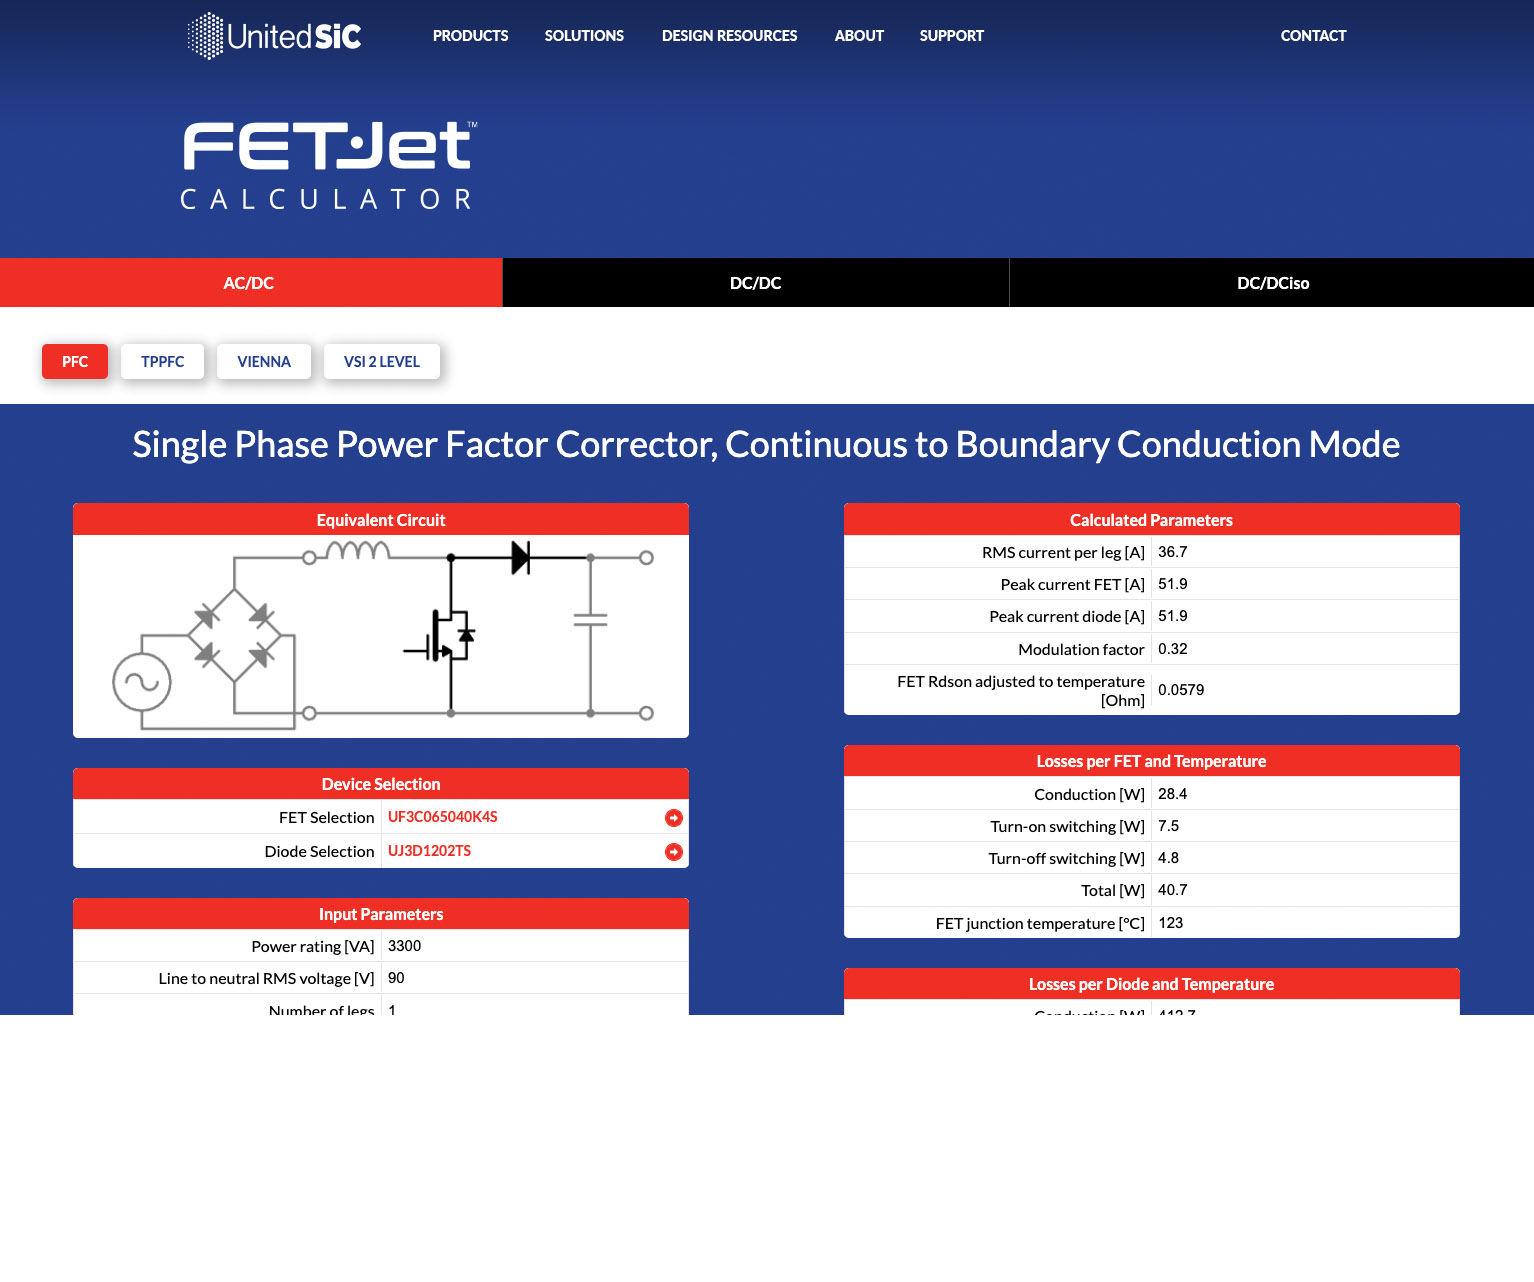 UnitedSiC launches new FET-Jet Calculator